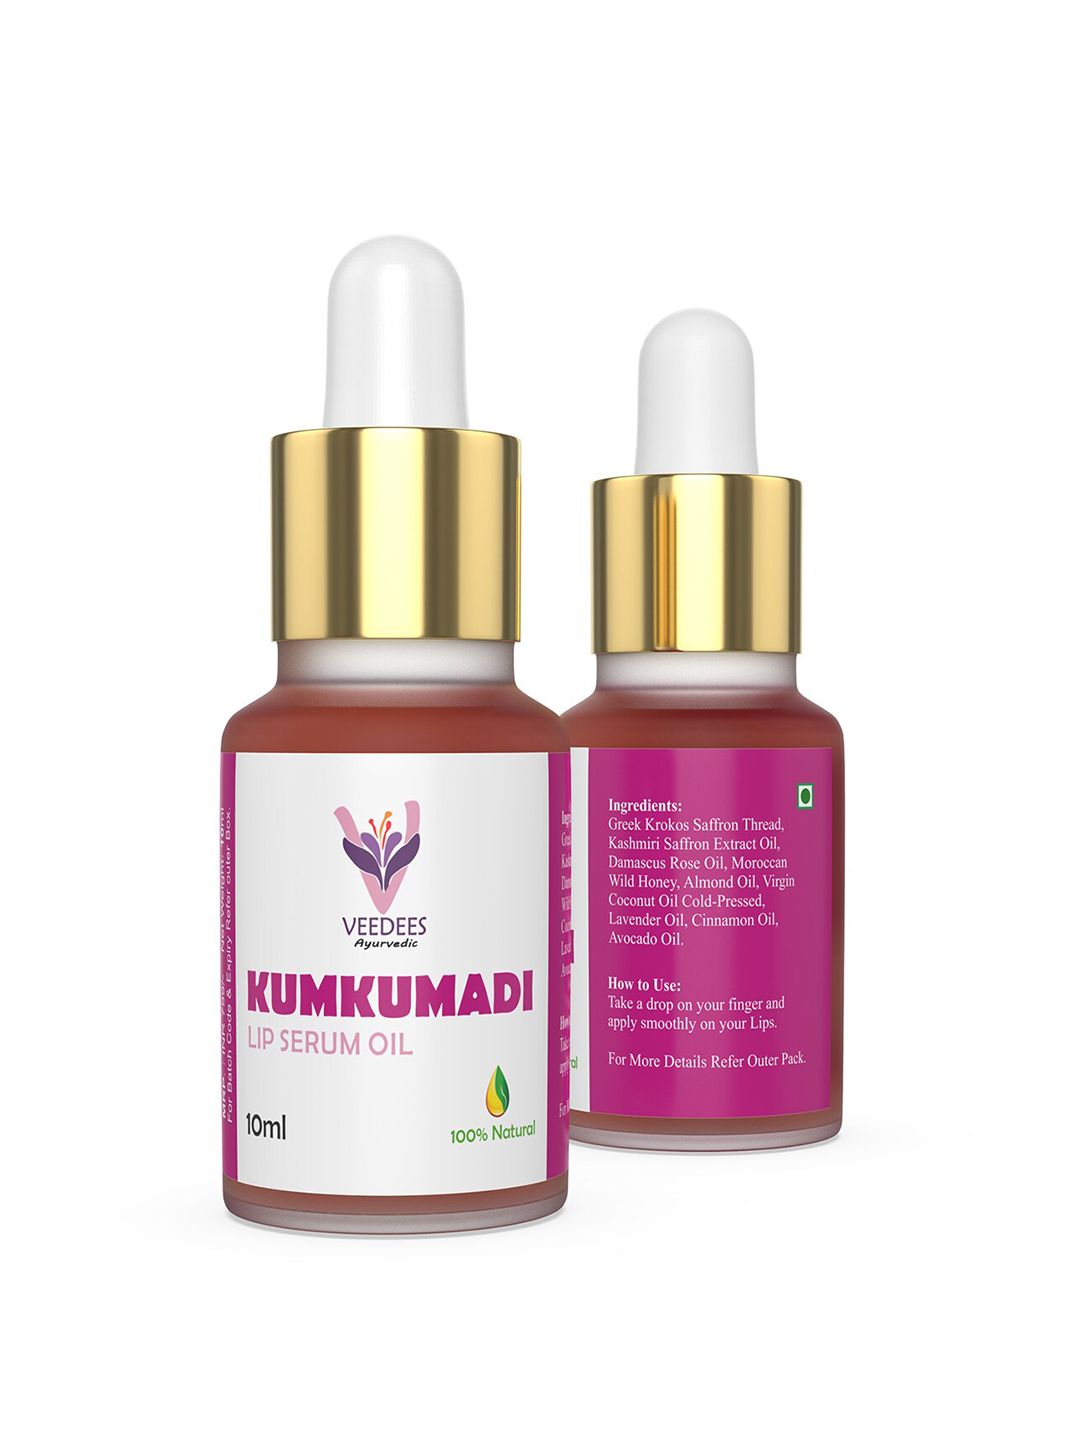 VEEDEES Kumkumadi 100% Natural Lip Serum Oil 10 ml Price in India